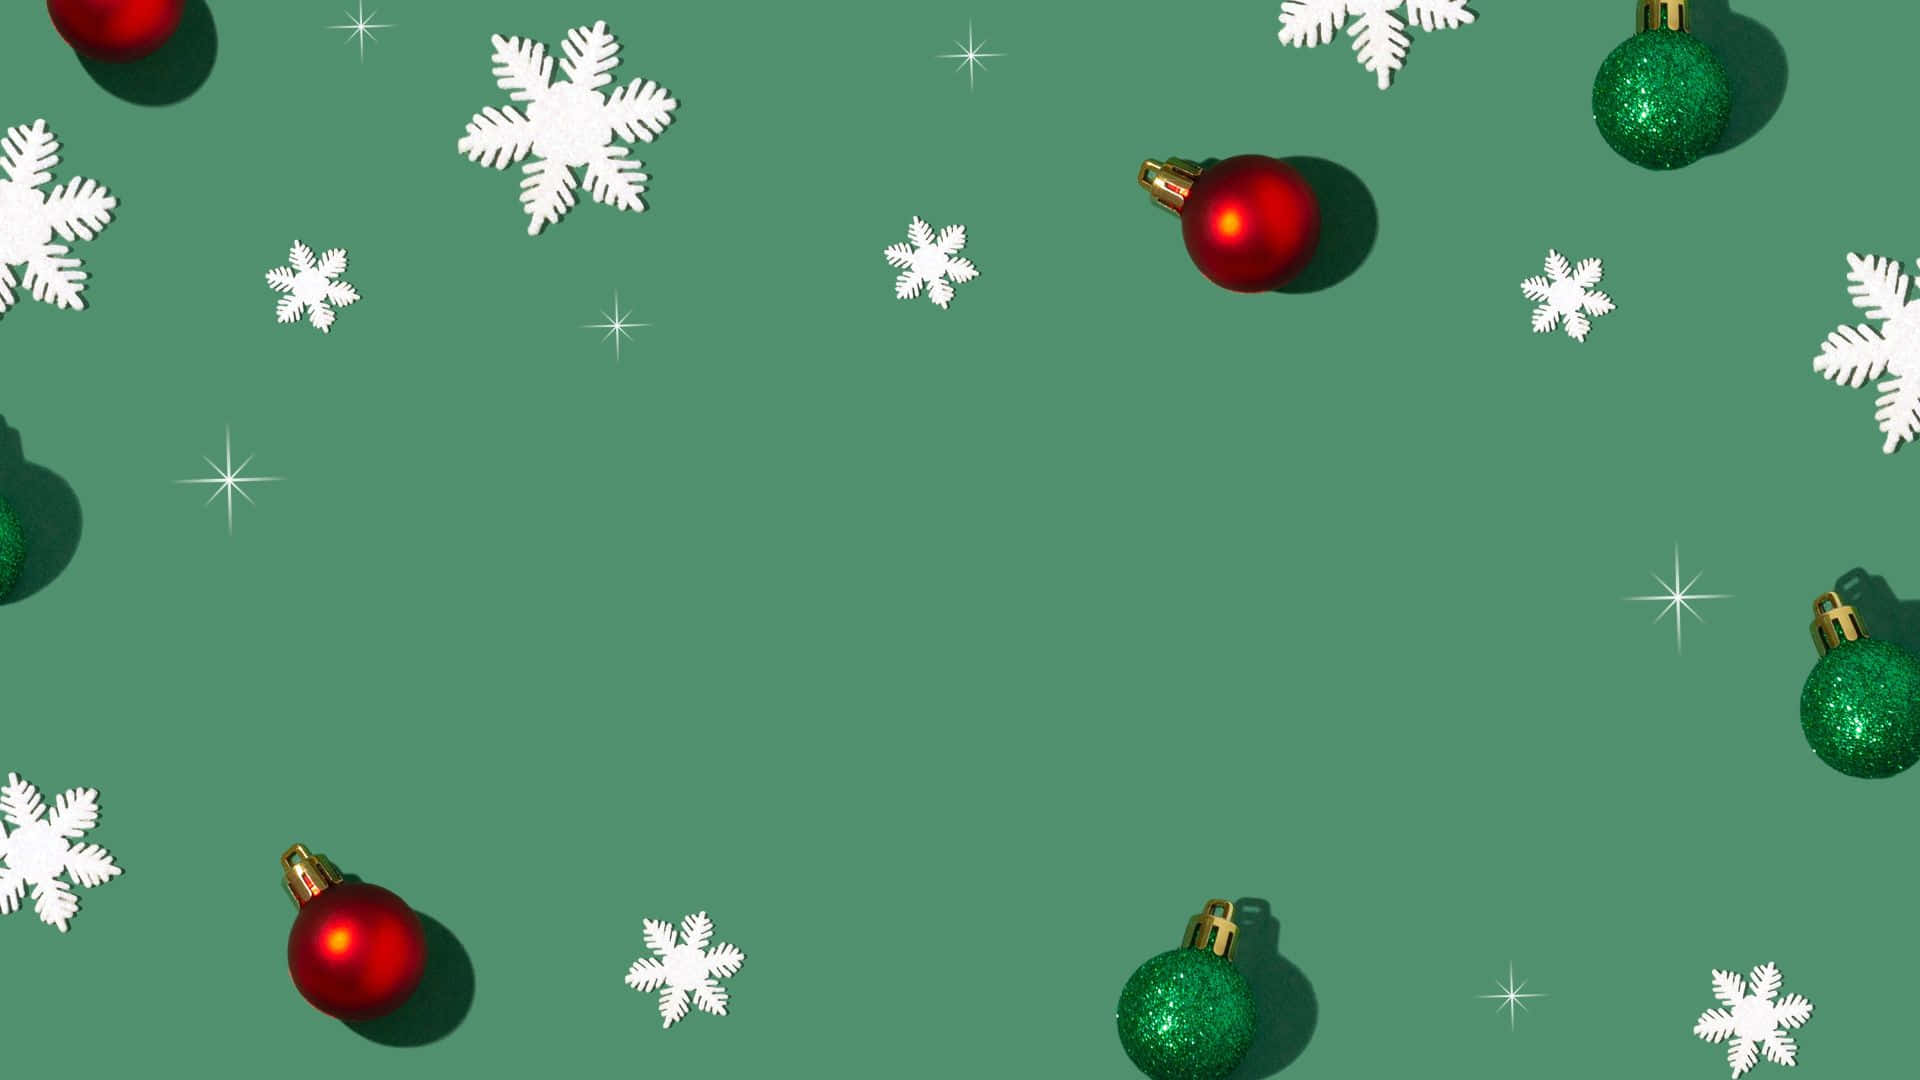 Zoom Julebaggrund i grøn og rød